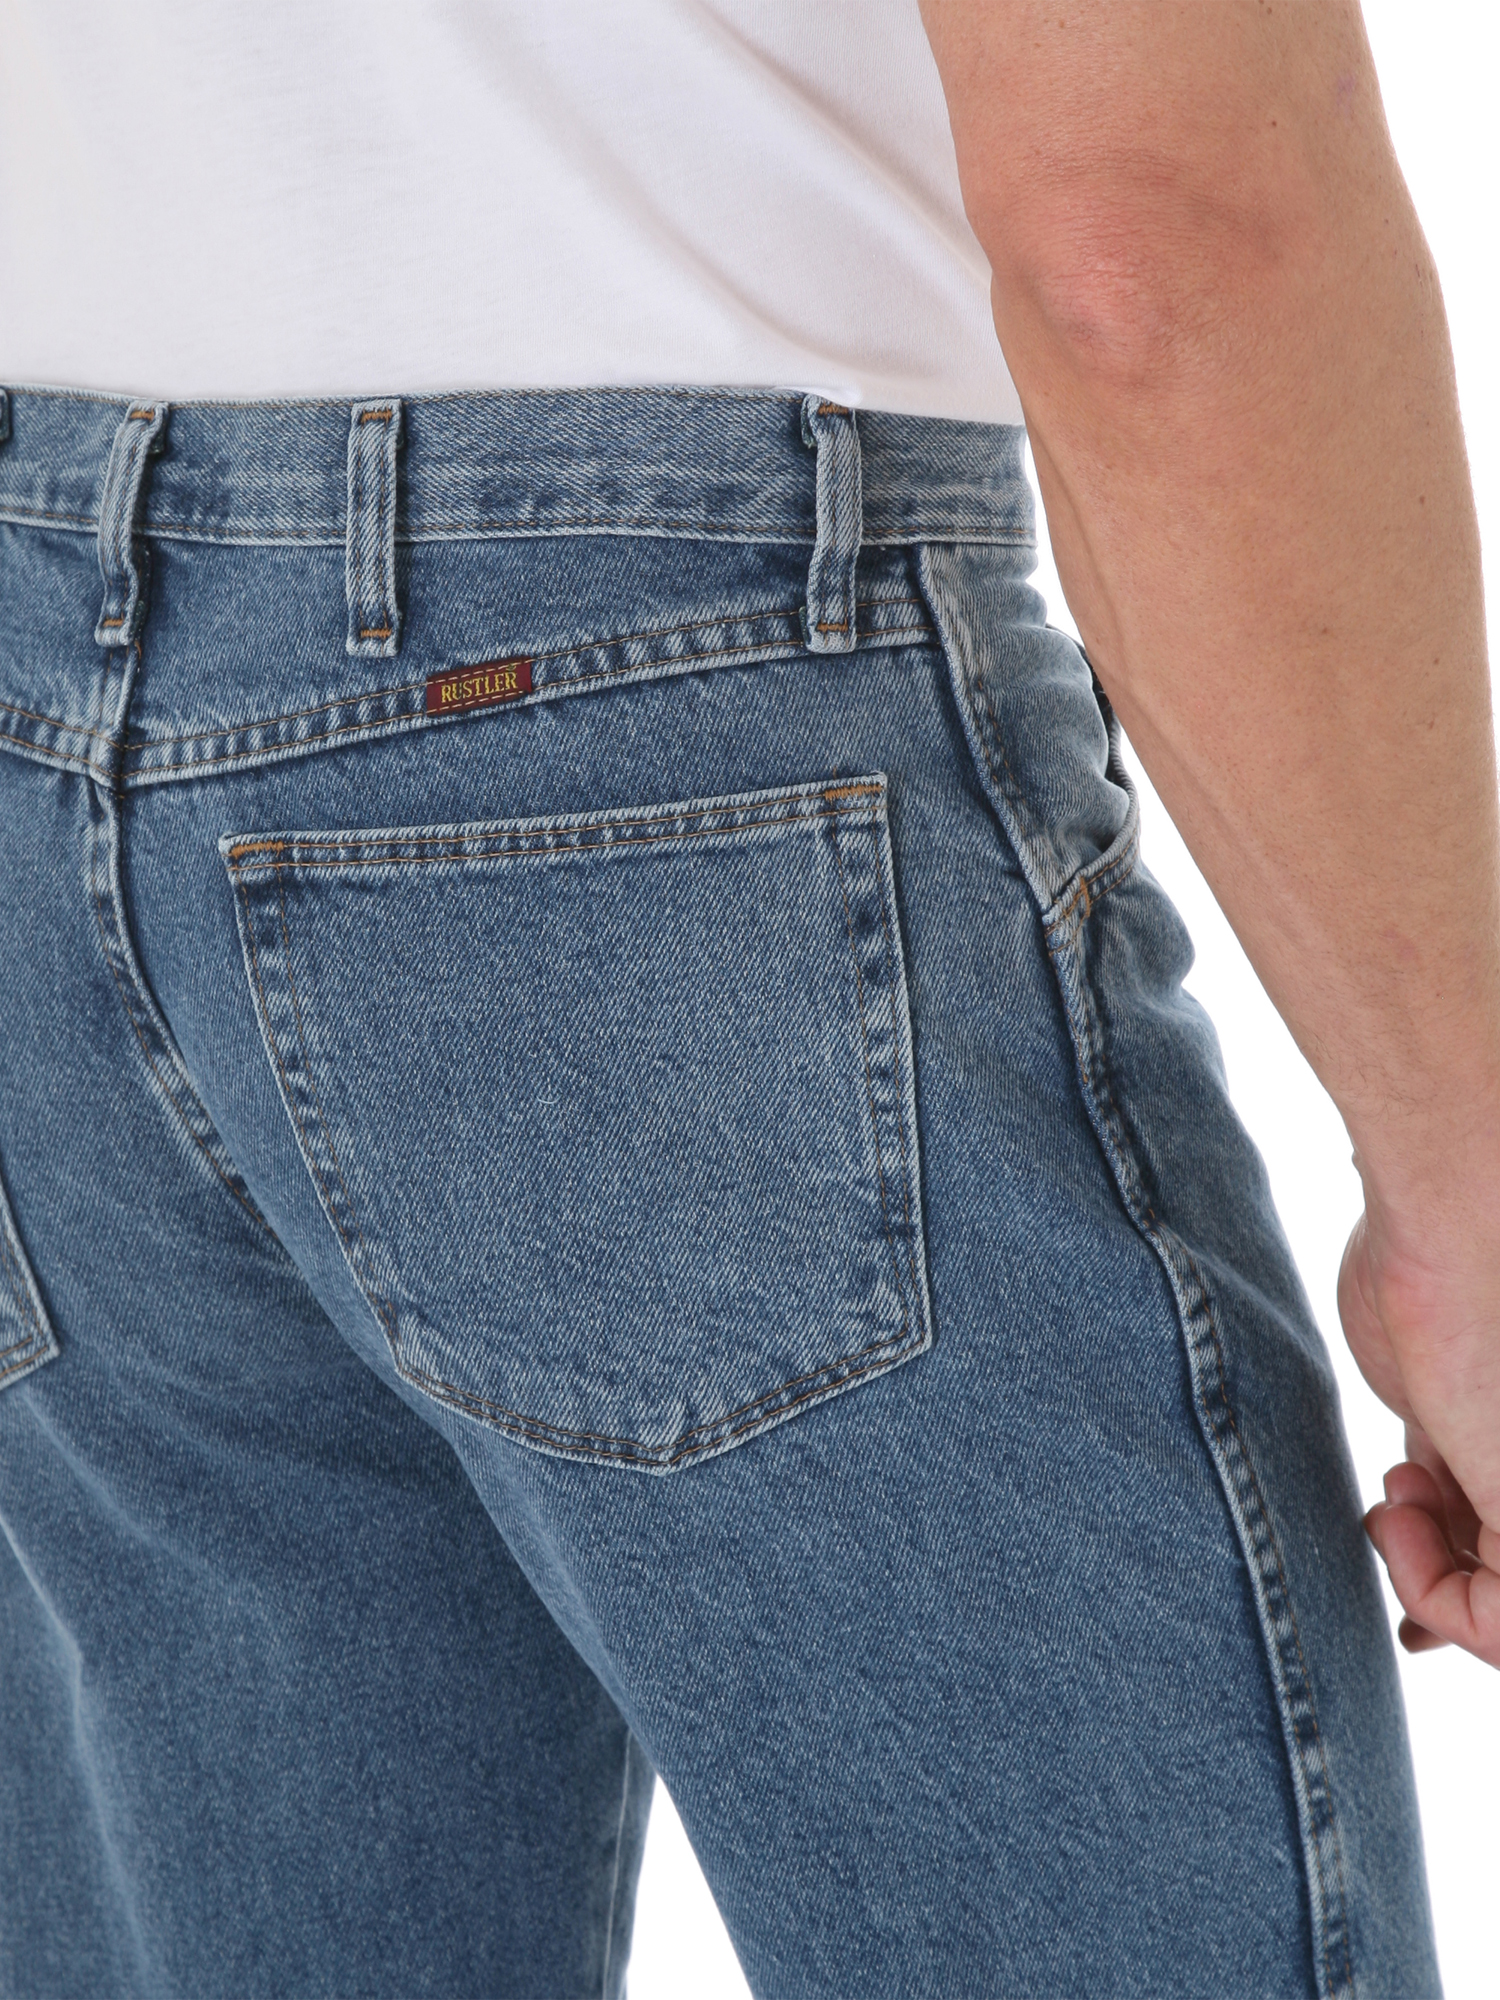 Wrangler Rustler Men's and Big Men's Regular Fit Jeans - image 4 of 5